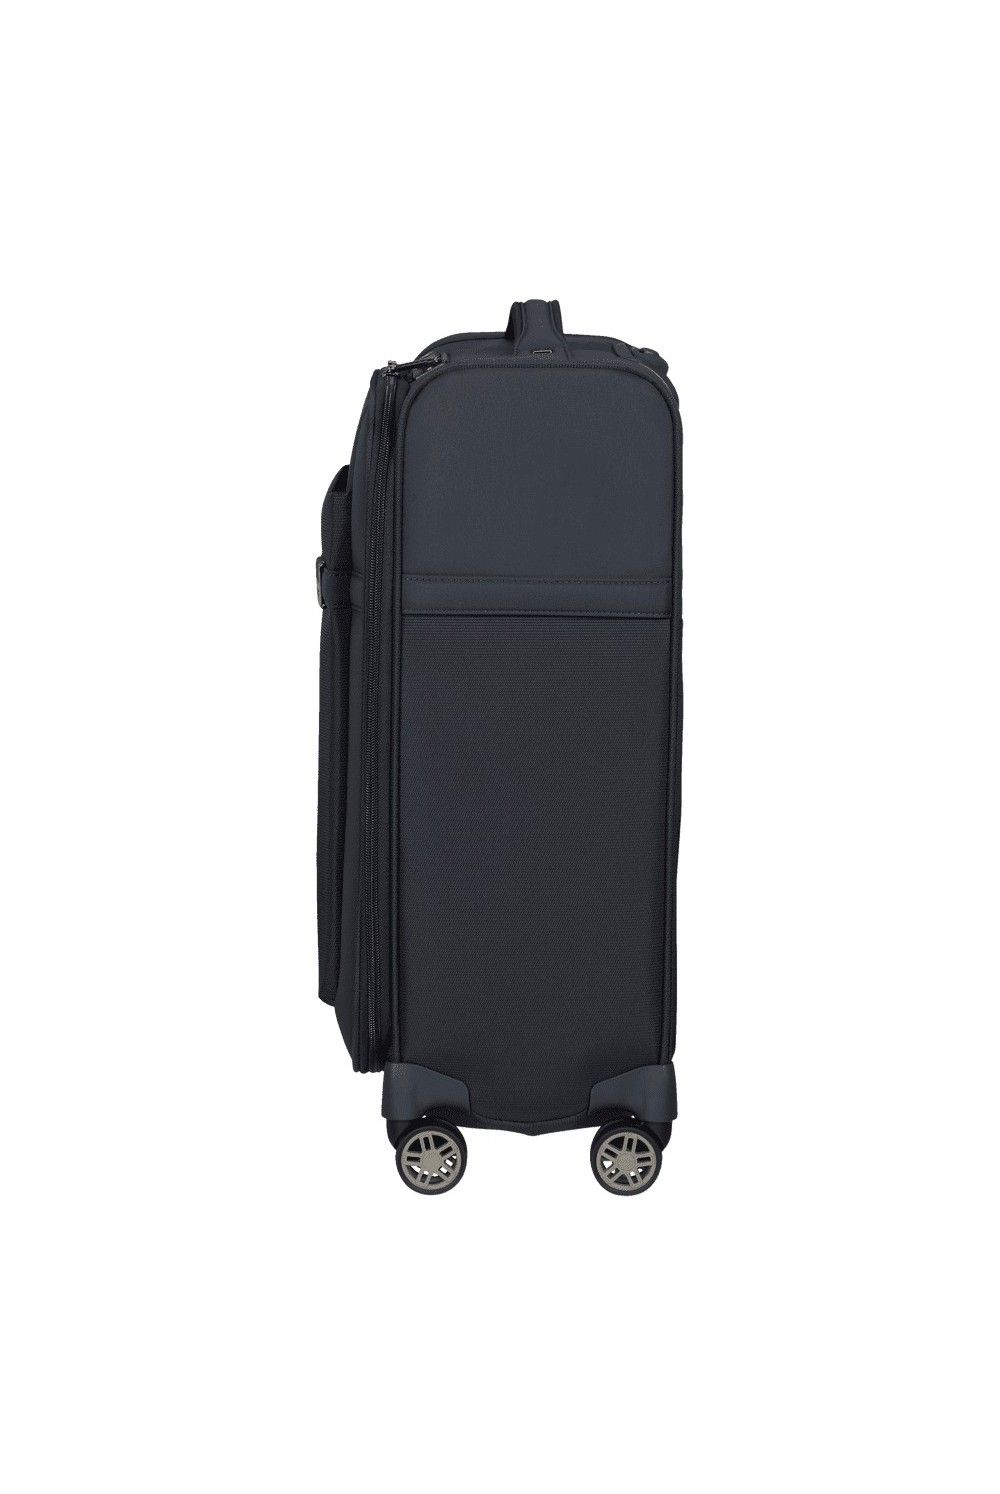 Samsonite Airea 55x35x22-25cm 4 wheel hand luggage